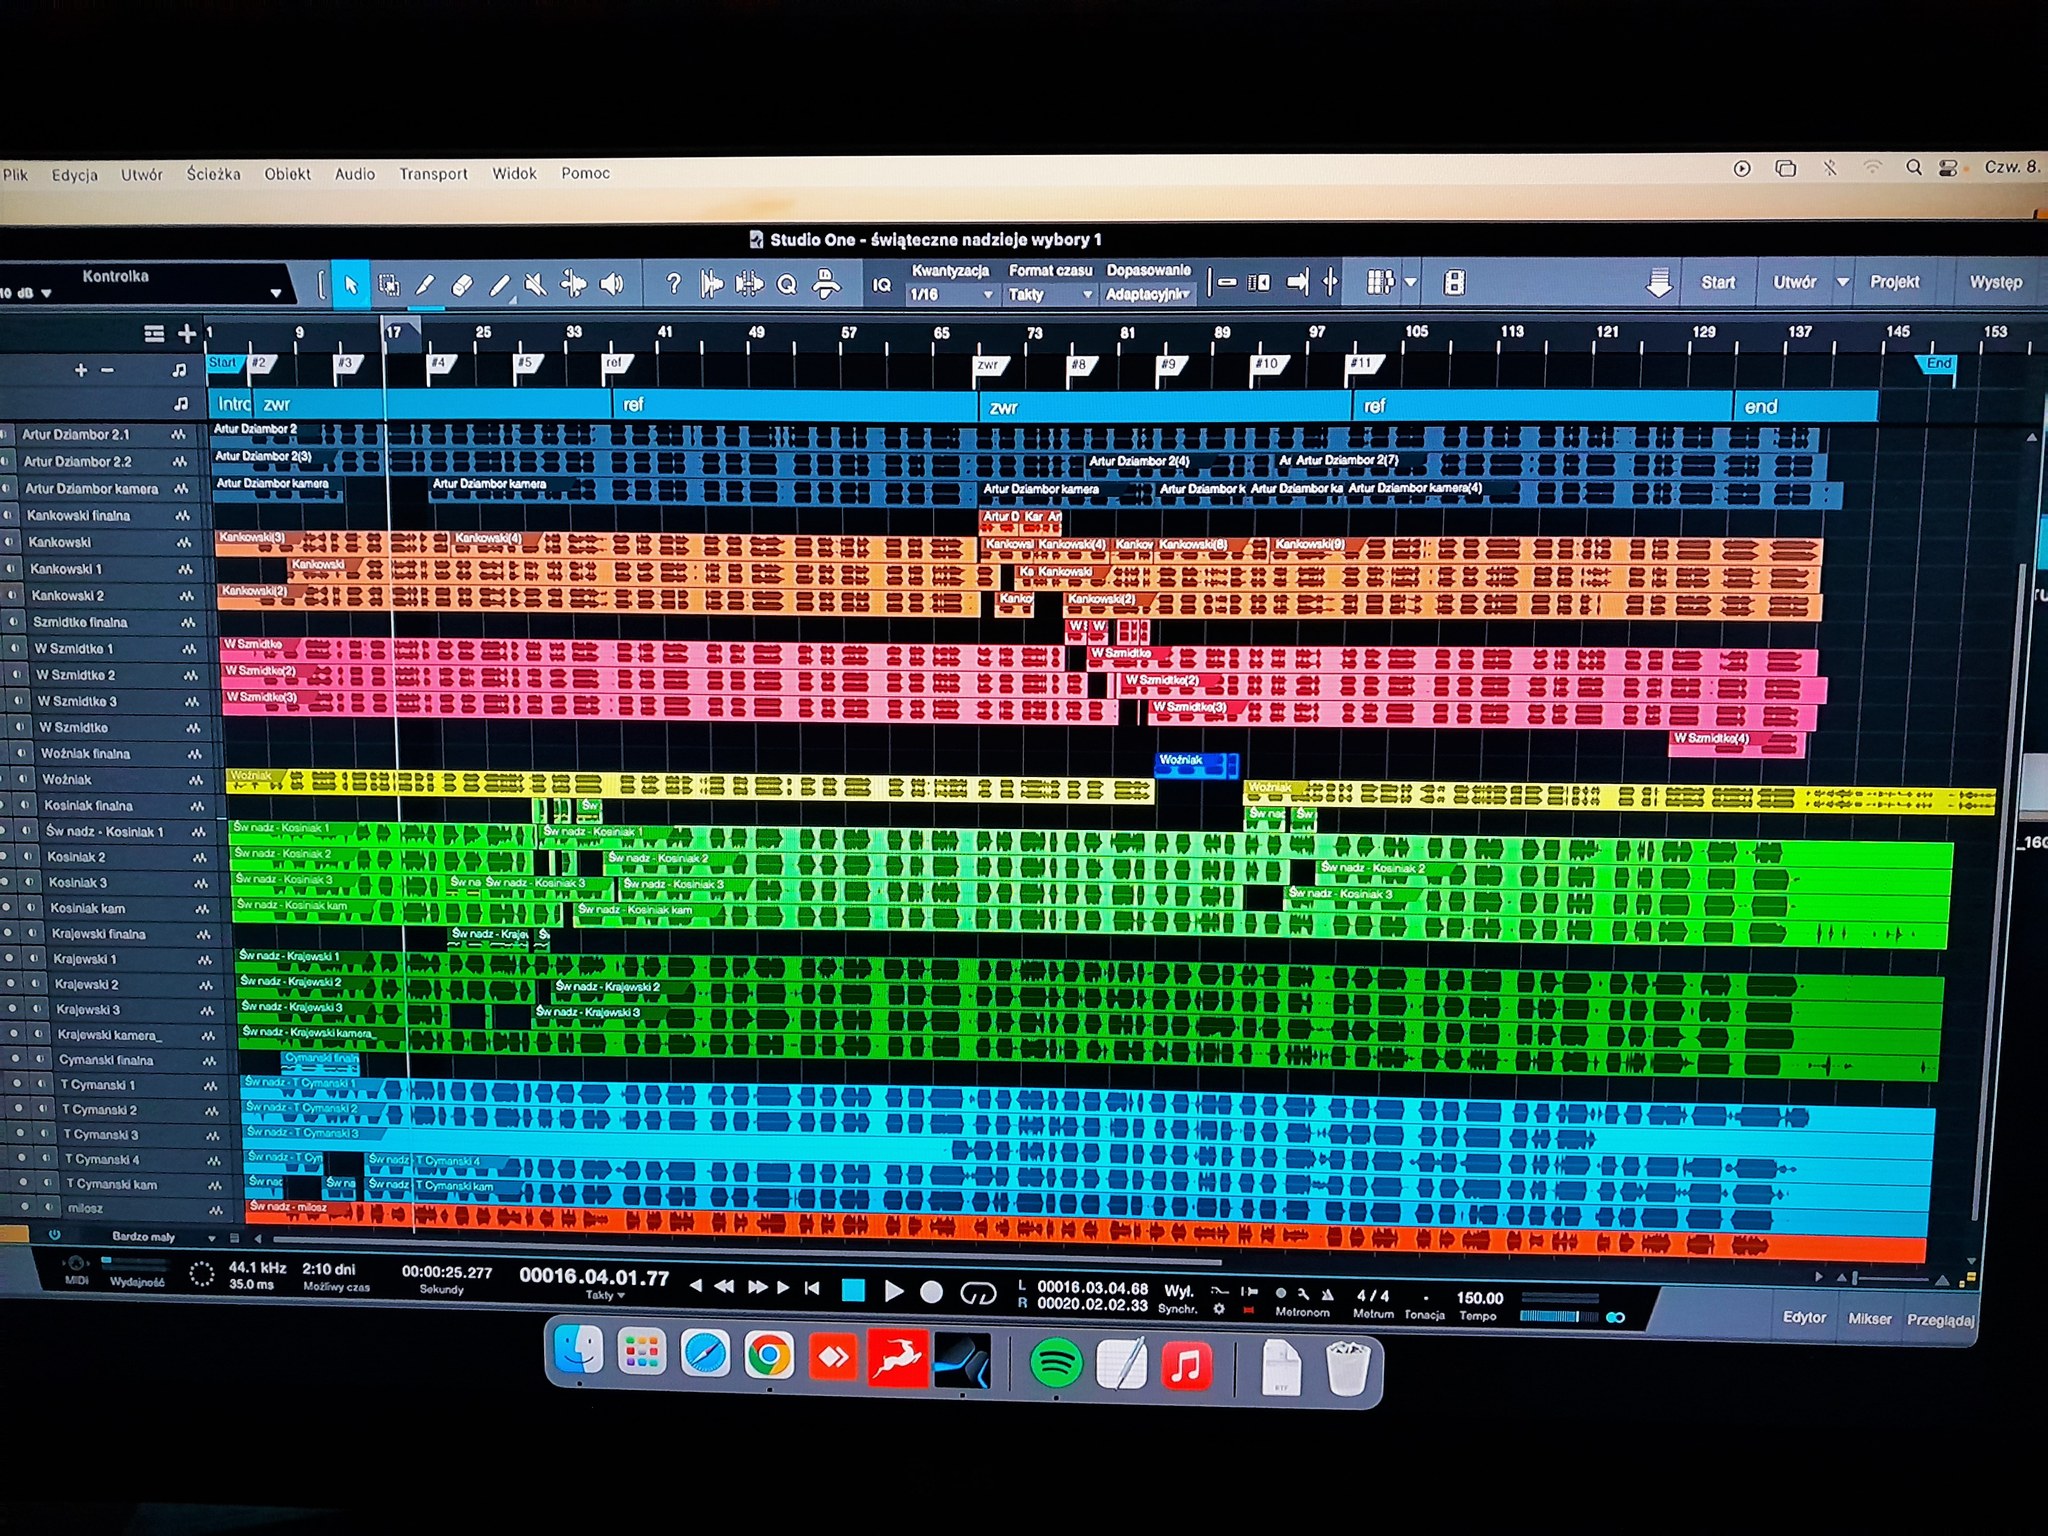 GUI systemu do nagrywania - widok ekranu komputera